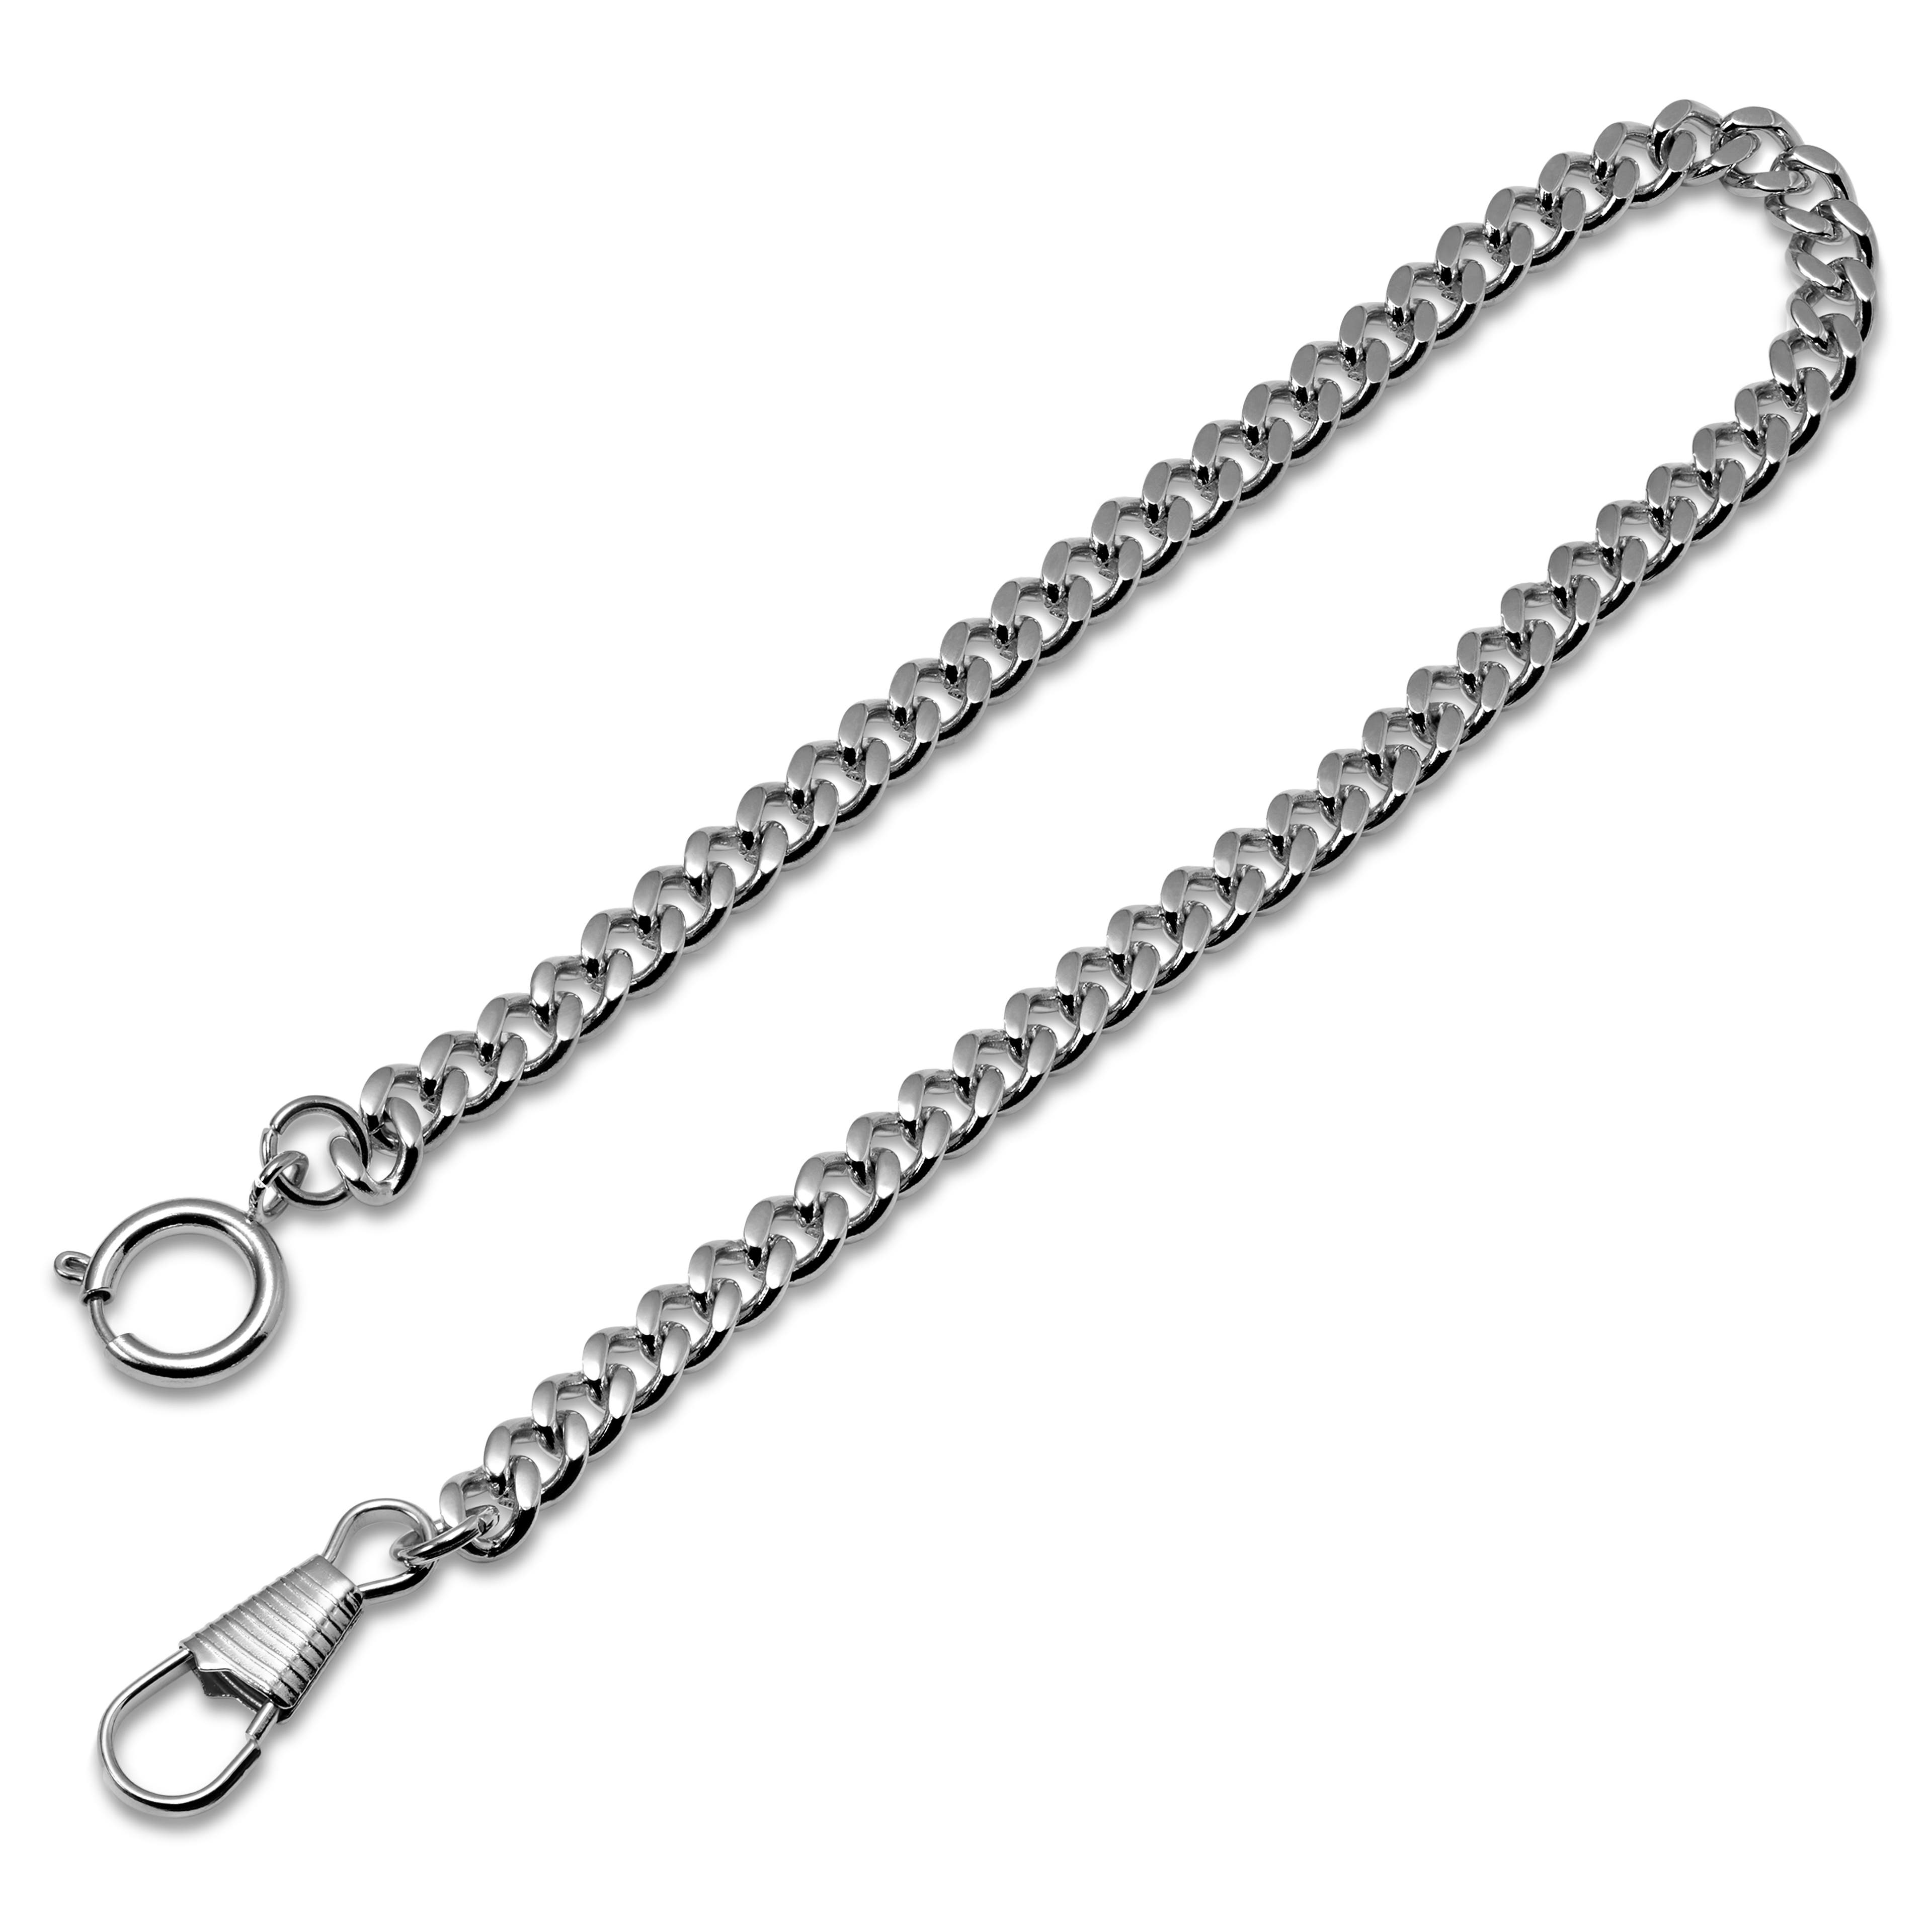 Silver-Tone Steel Bolt Ring Pocket Watch Chain